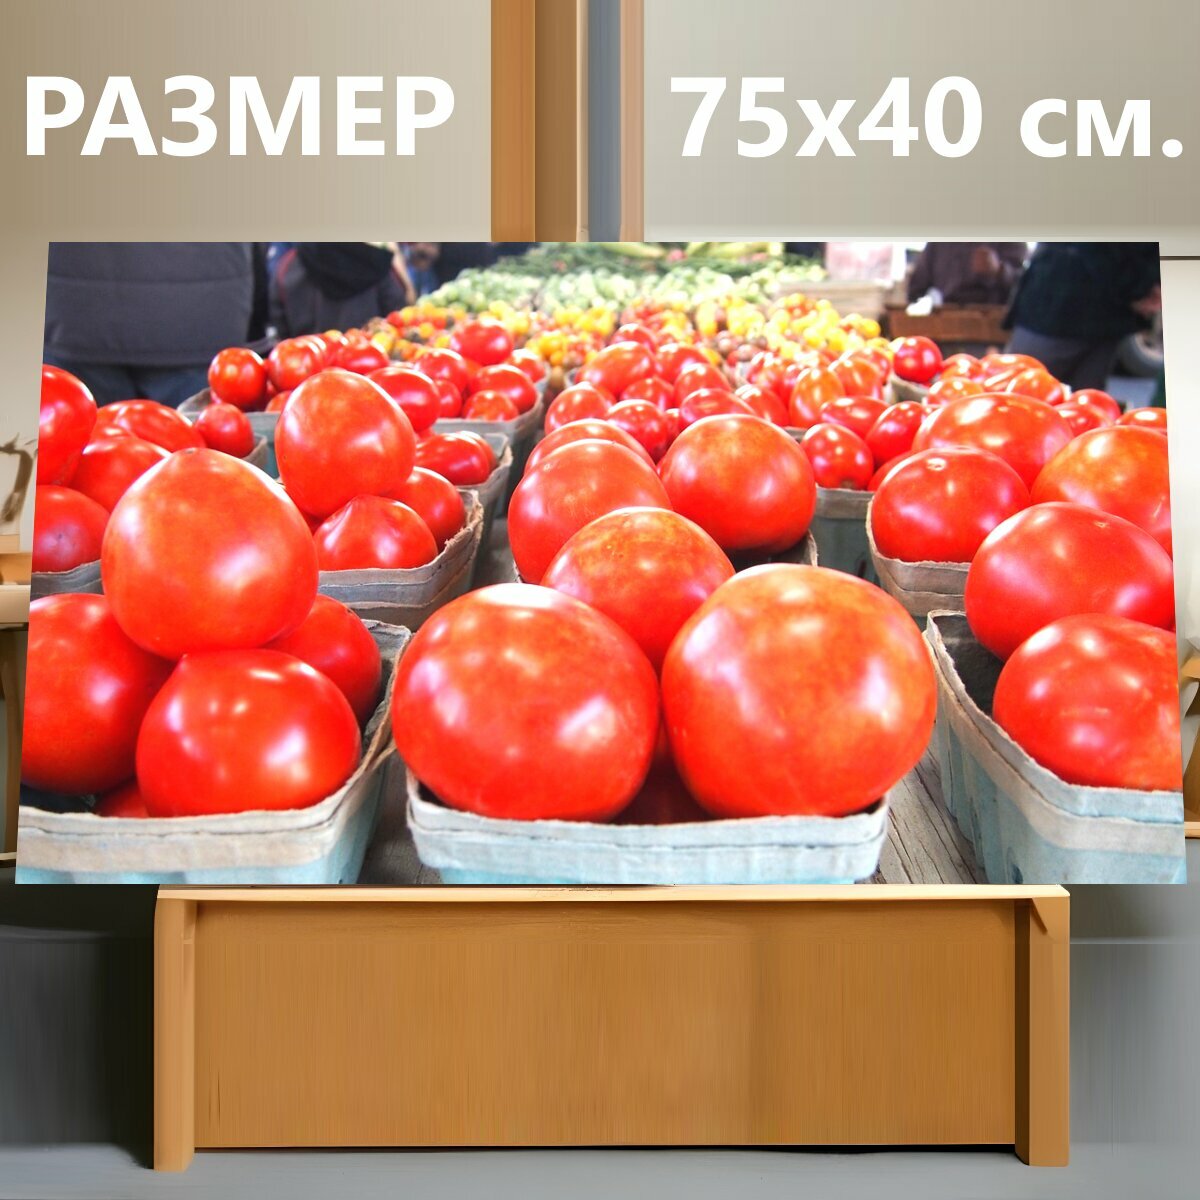 Картина на холсте "Овощи, помидоры, овощ" на подрамнике 75х40 см. для интерьера